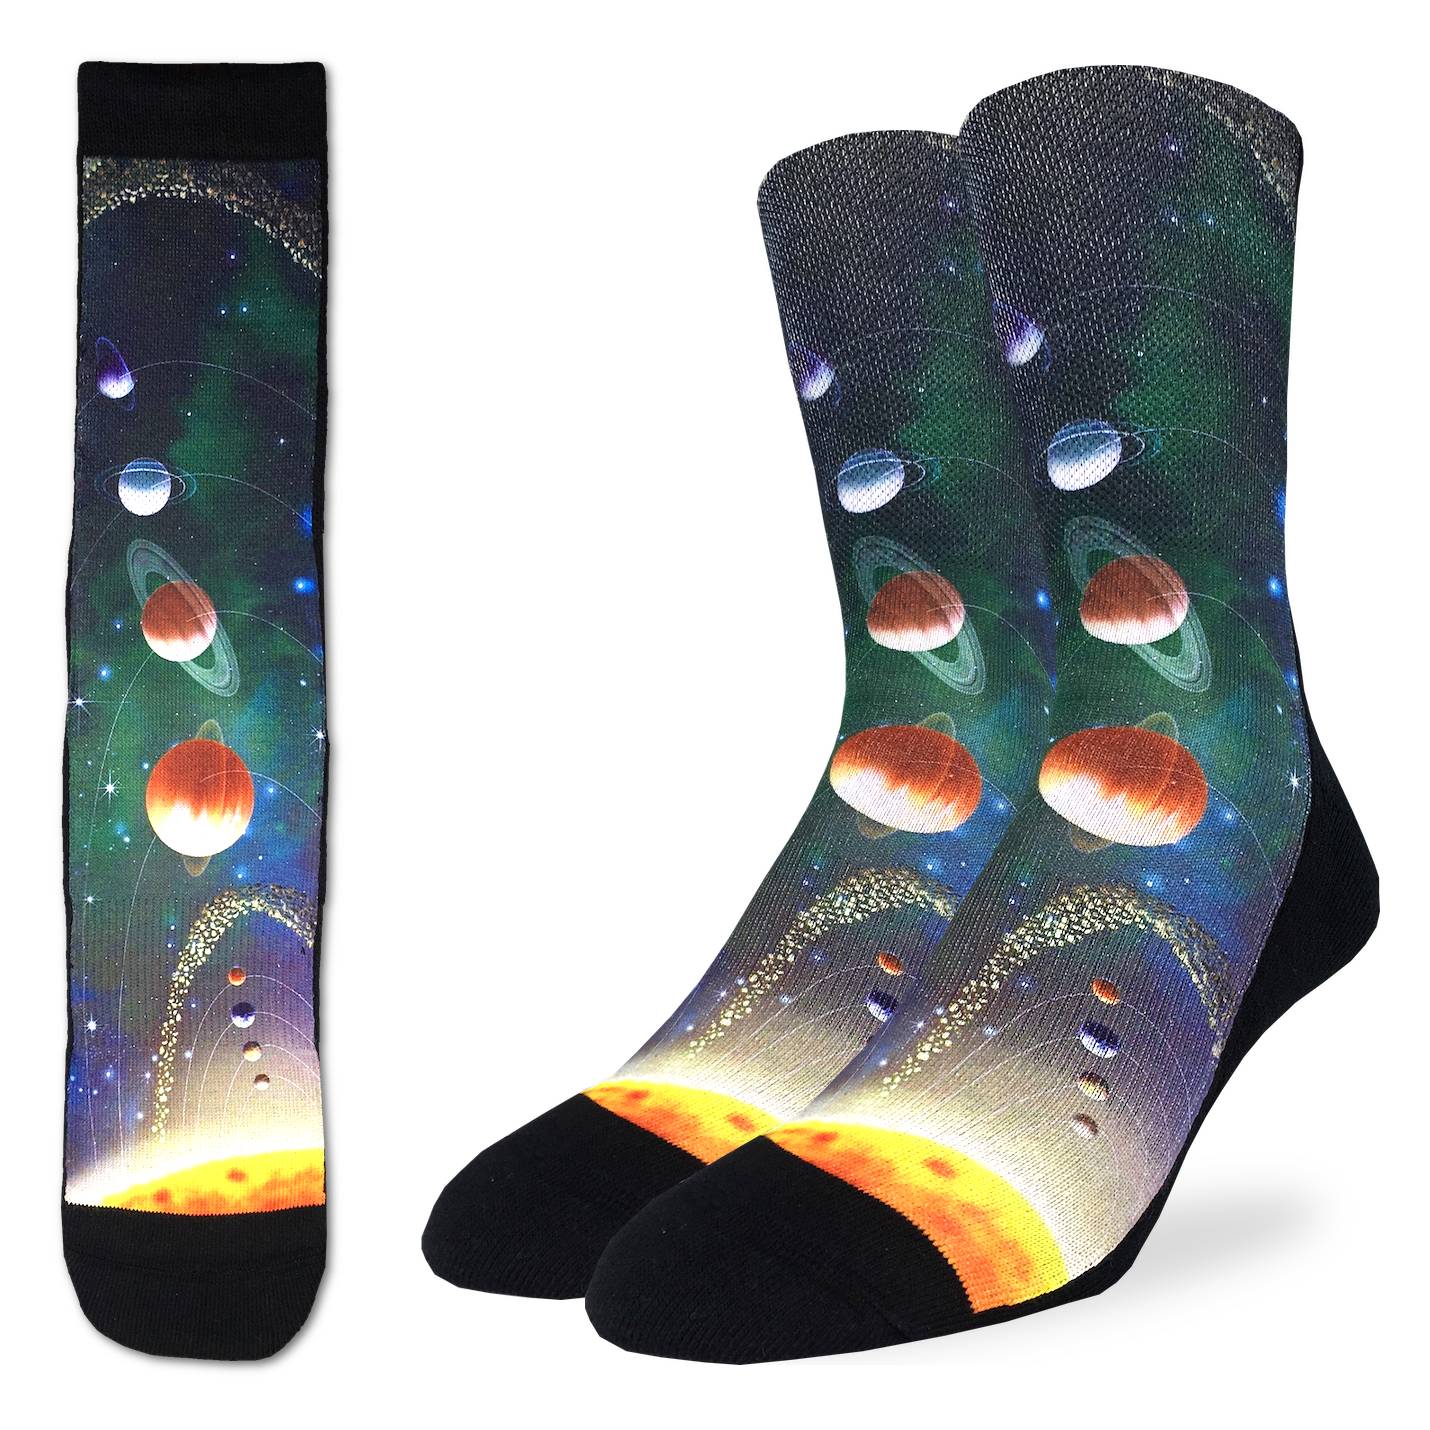 Men's Solar System Crew Socks